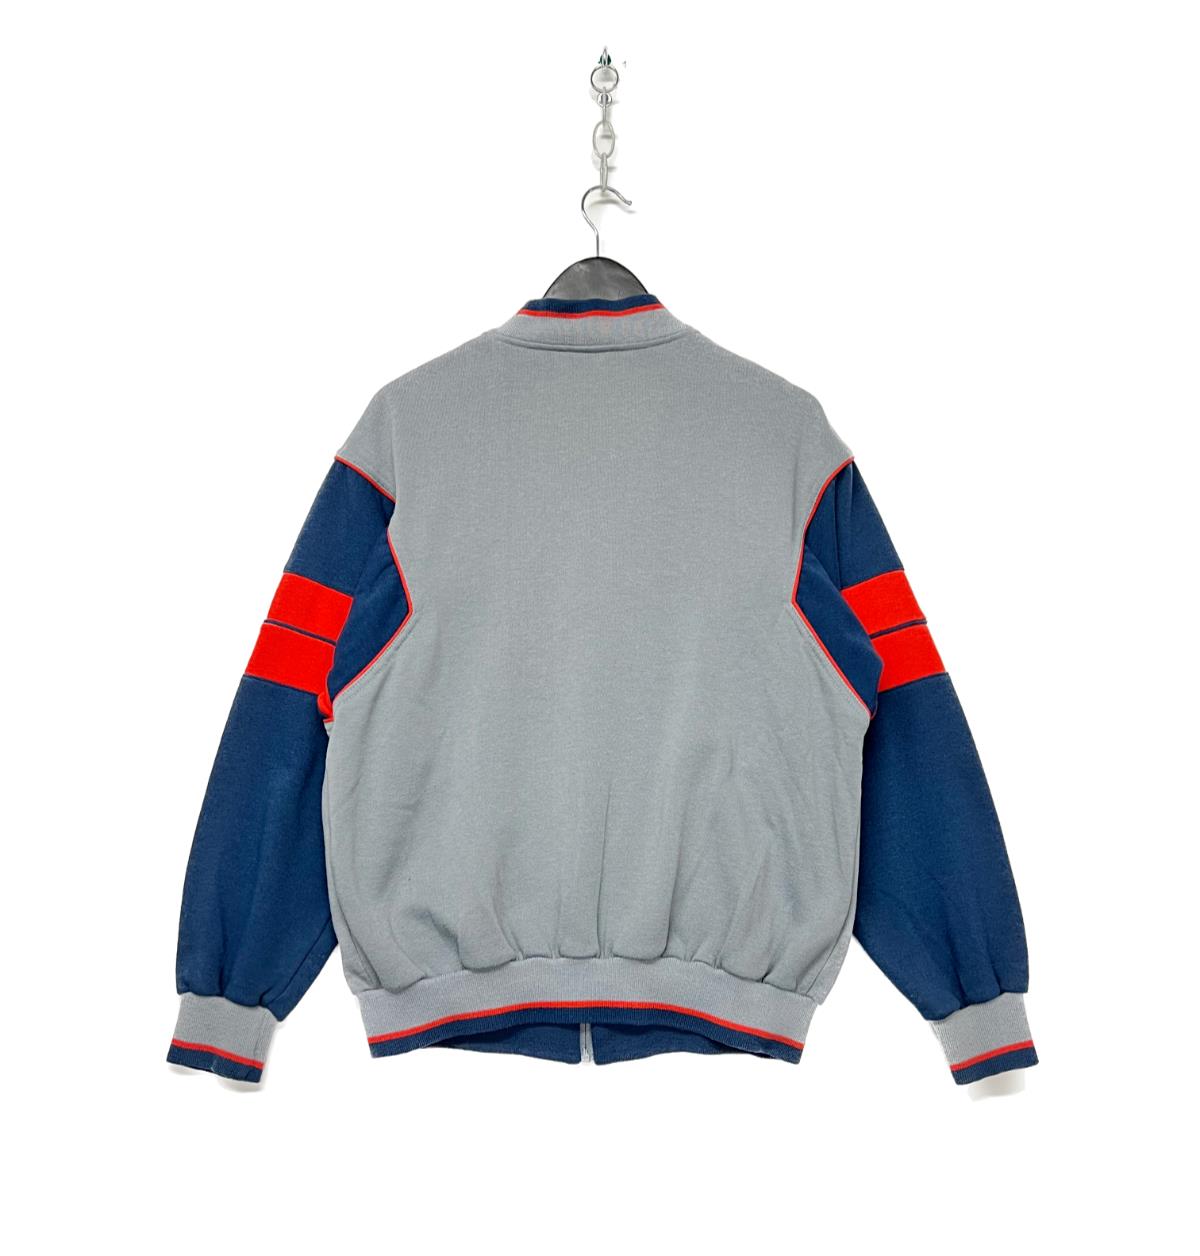 Adidas Vintage 80s Full Zip Track Sweatshirt Grey and Blue Varsity Collar